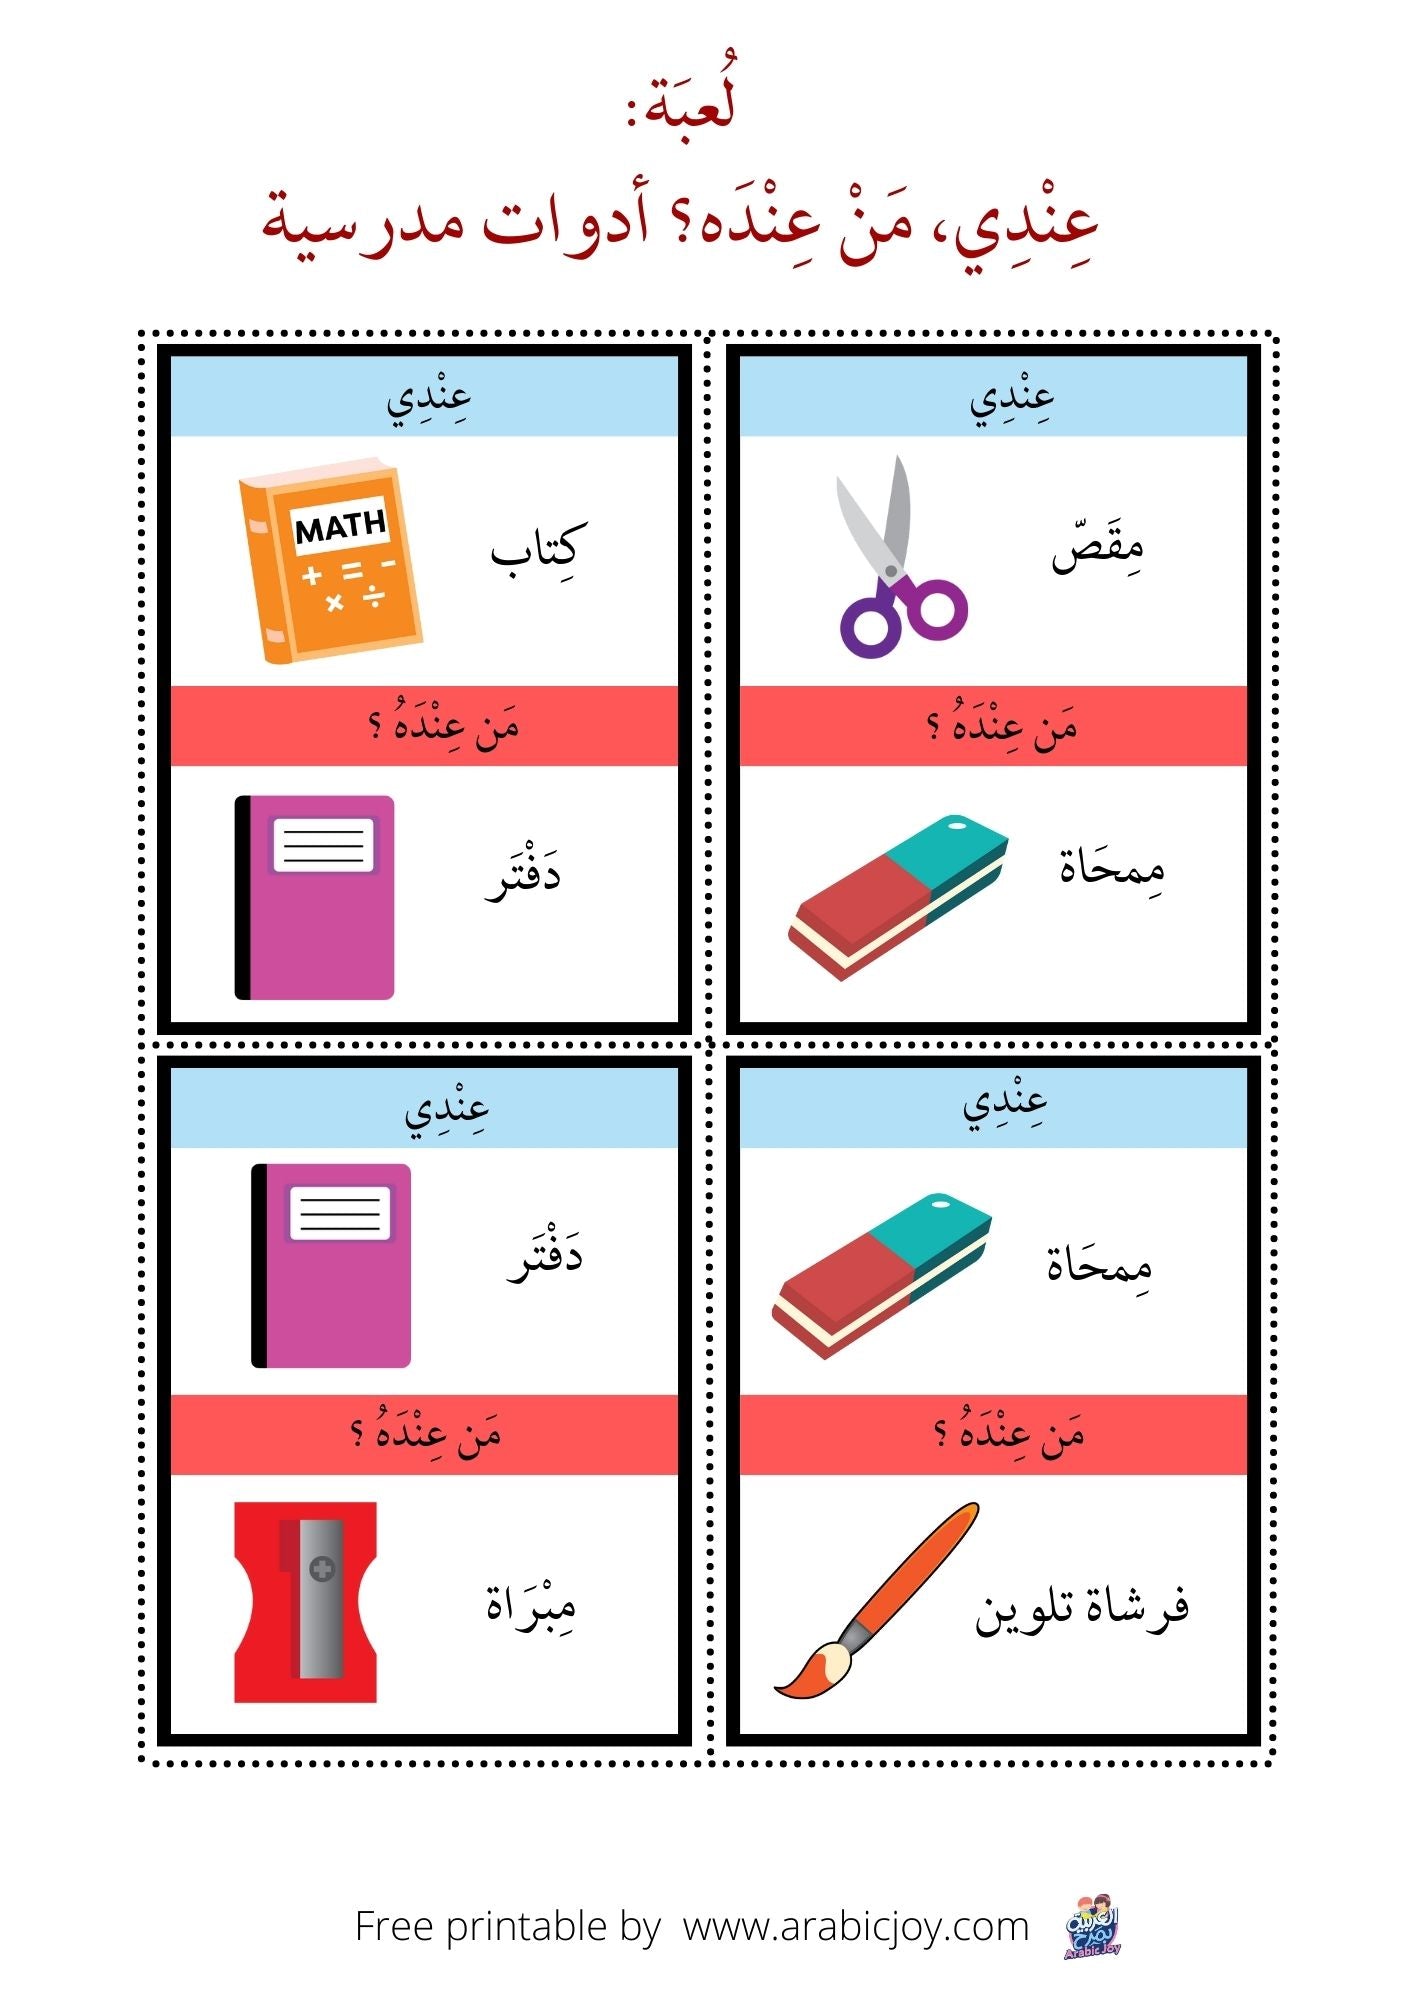 Back to School Arabic Games Free PDF Download -  ألعاب العودة إلى المدرسة للتحميل الإلكتروني